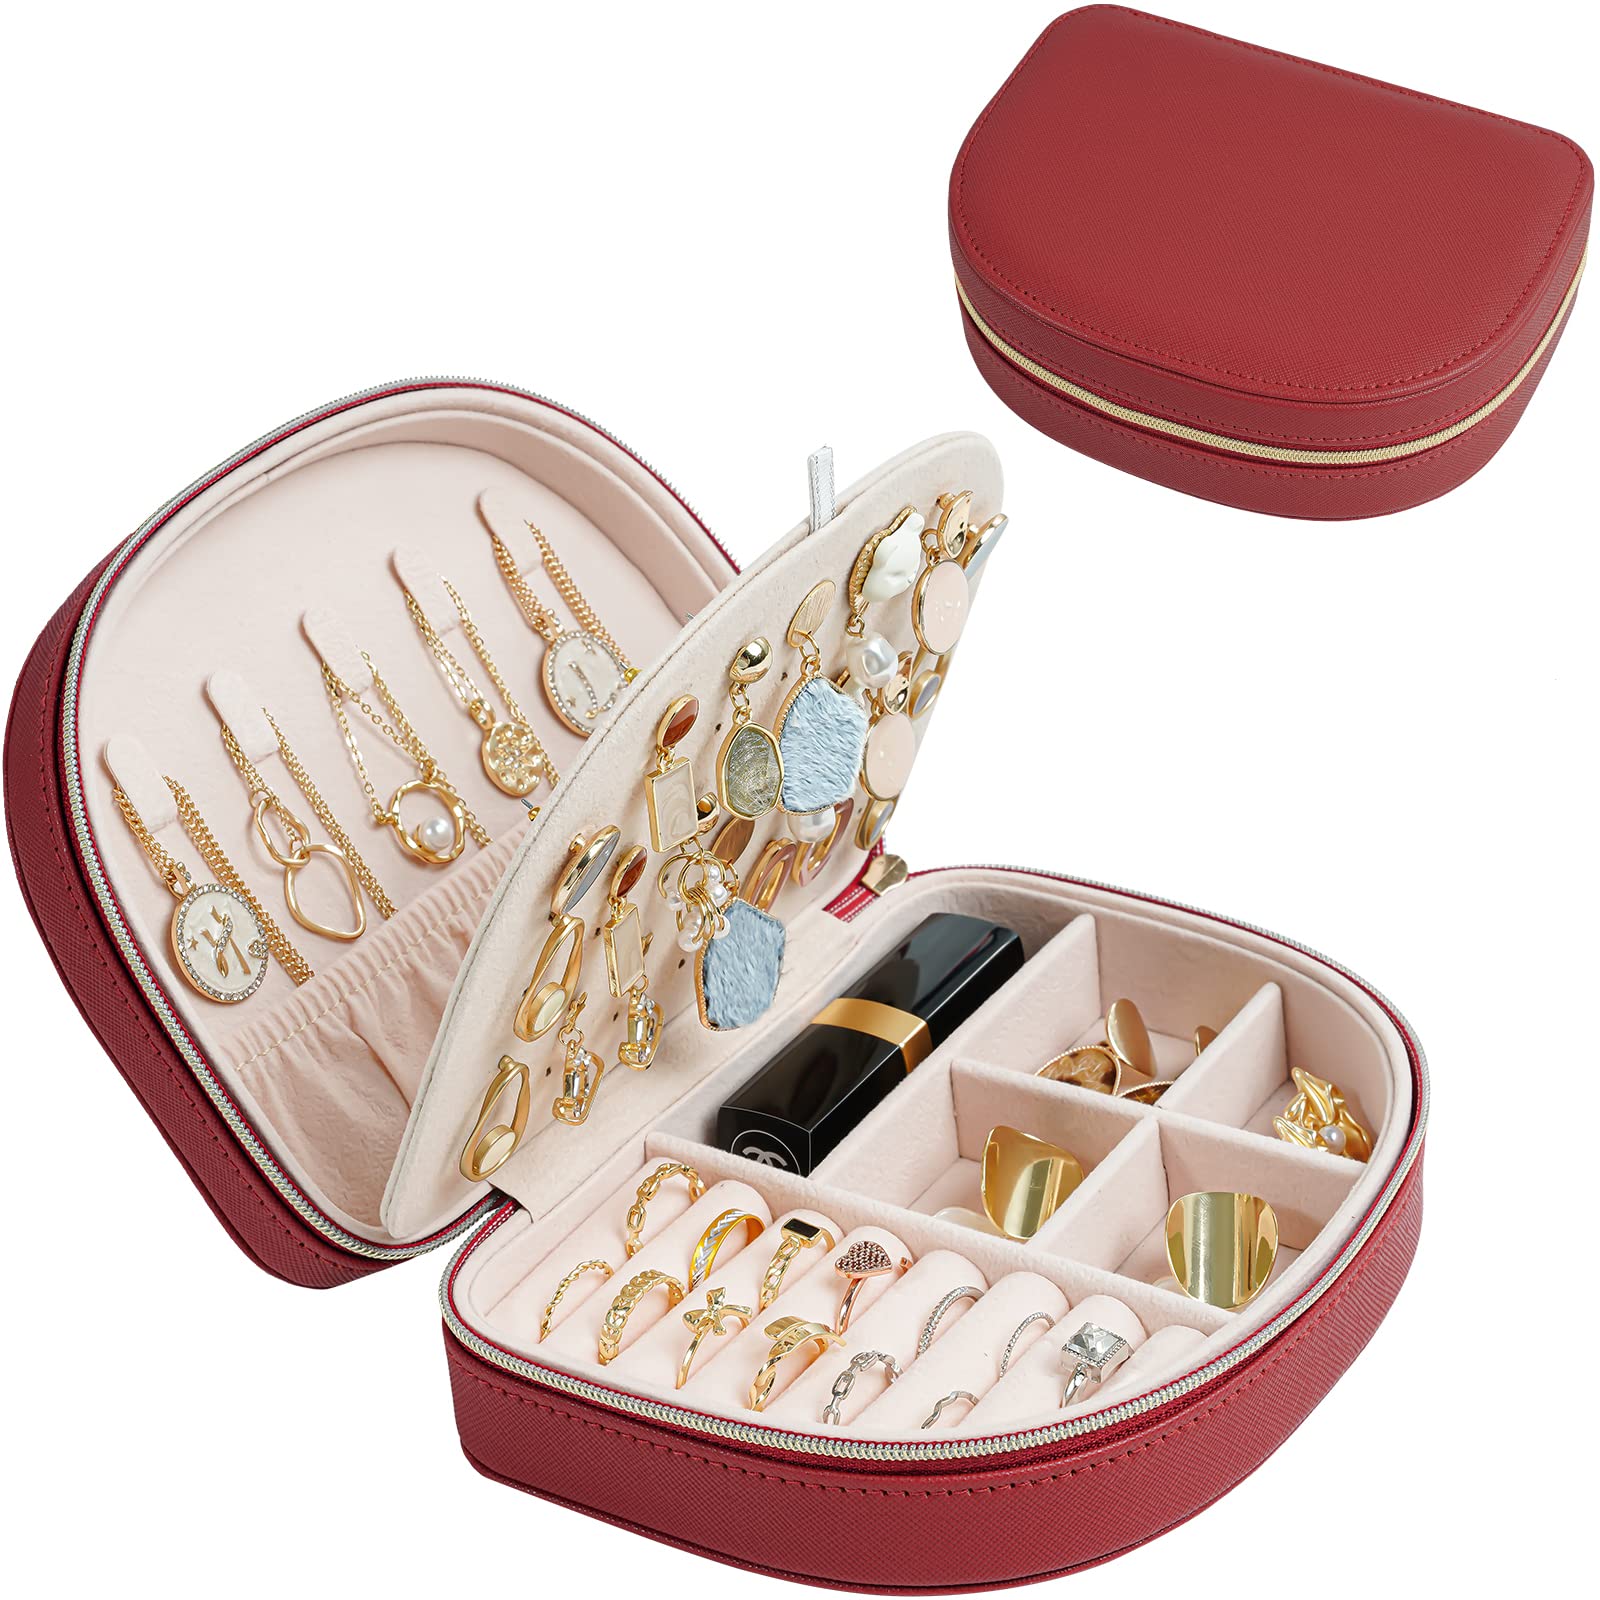 Small Portable Seashell-Shaped Jewelry Case